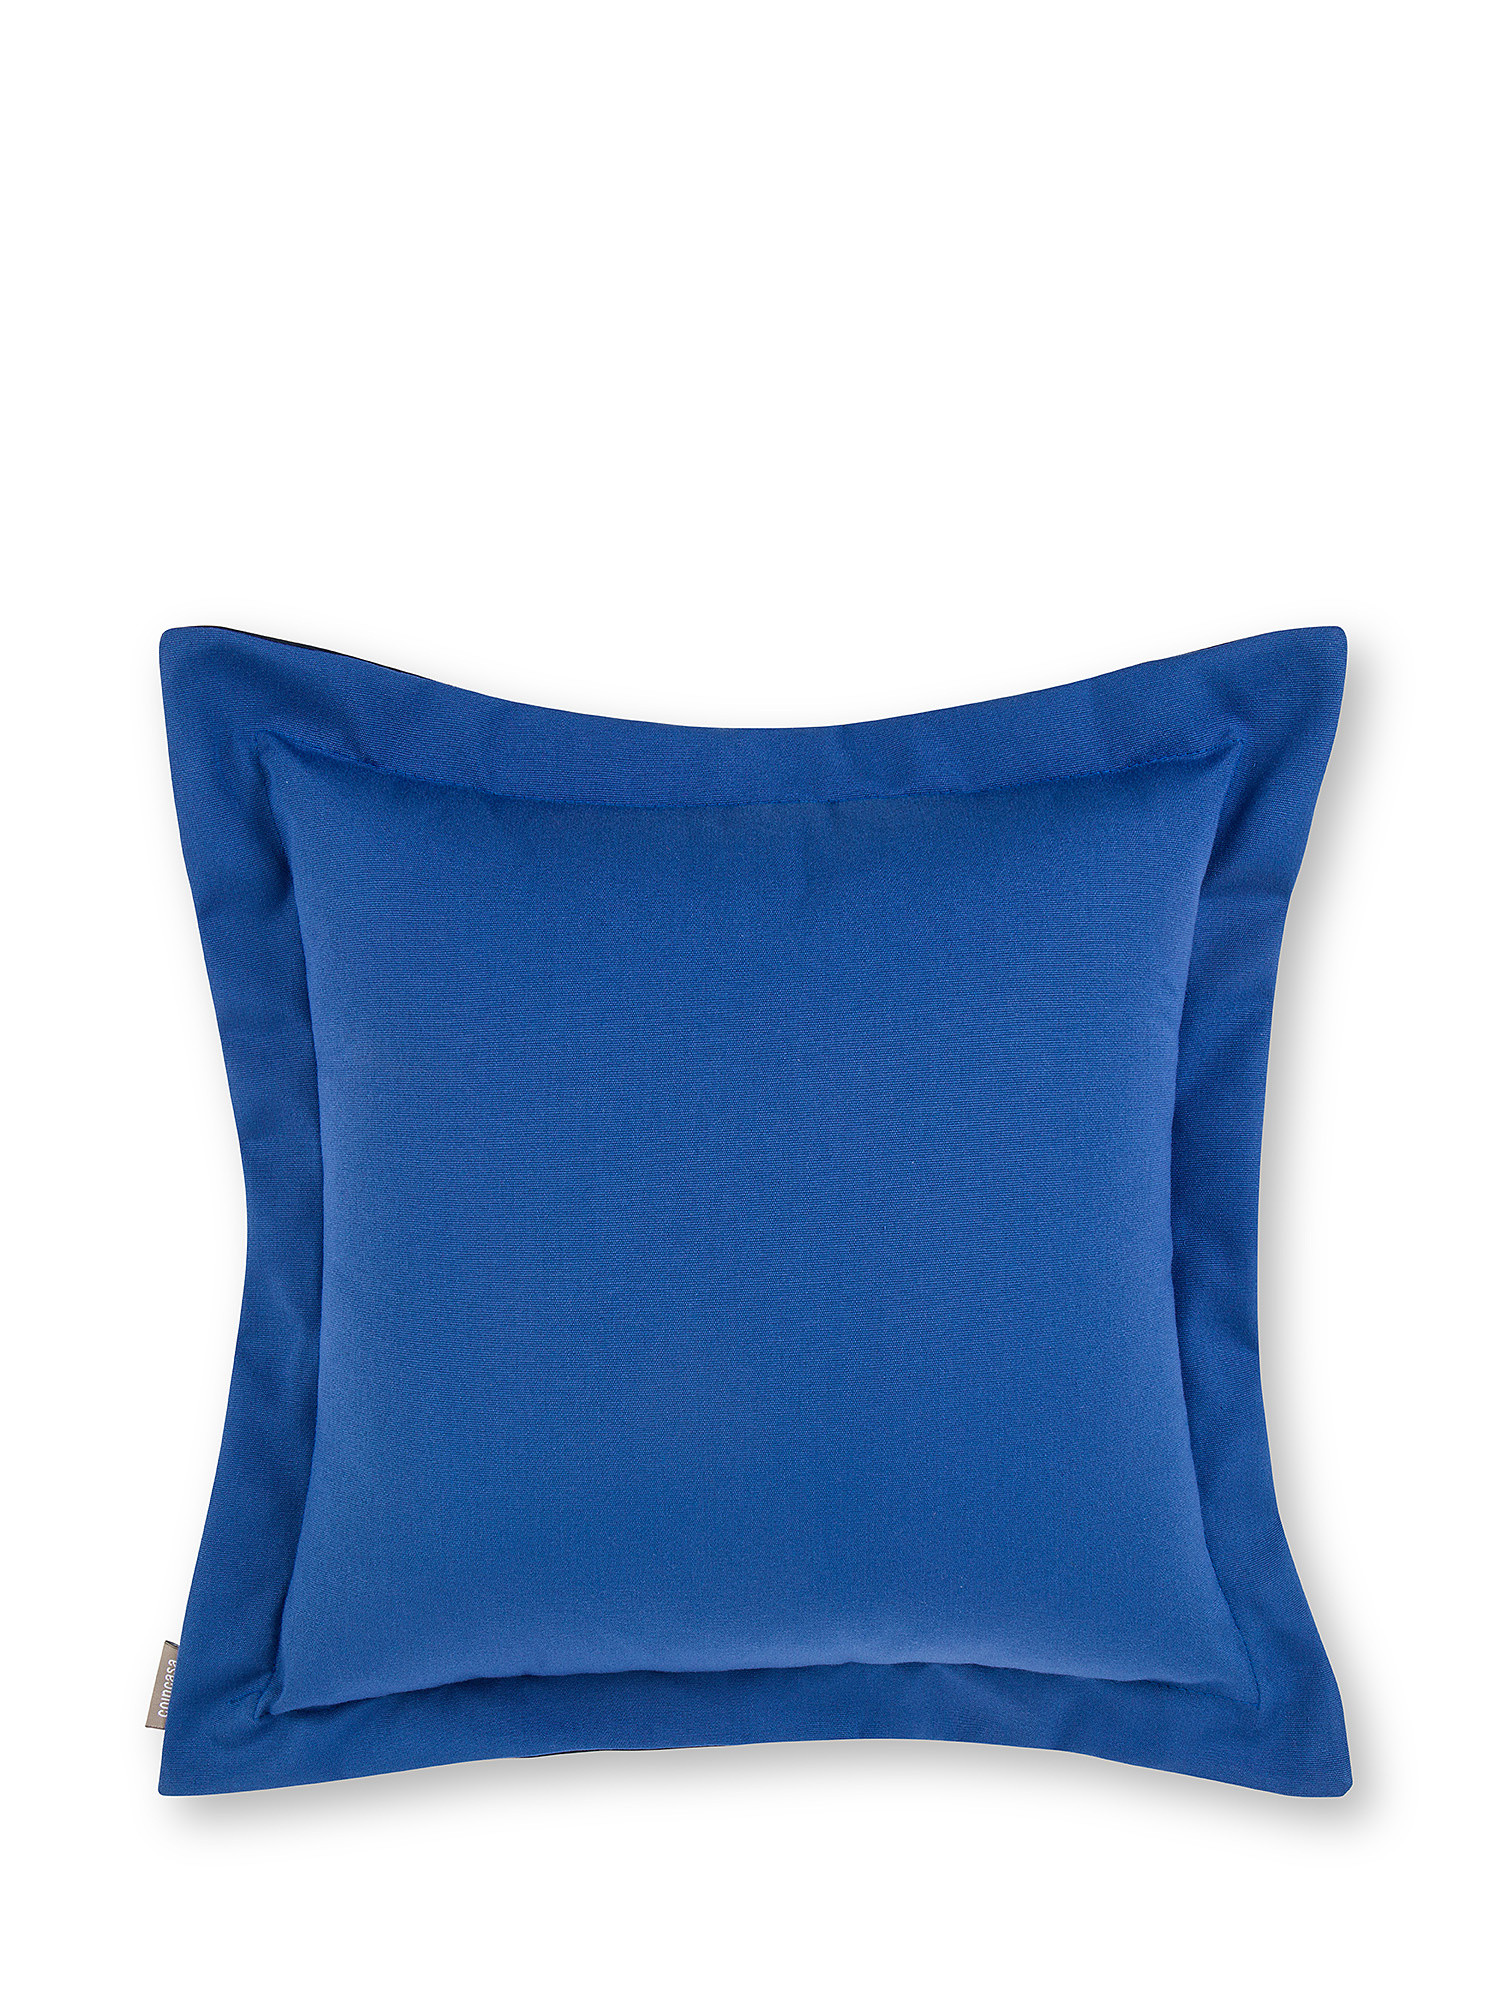 Cuscino da esterno in tessuto double color 45x45cm, Blu, large image number 0